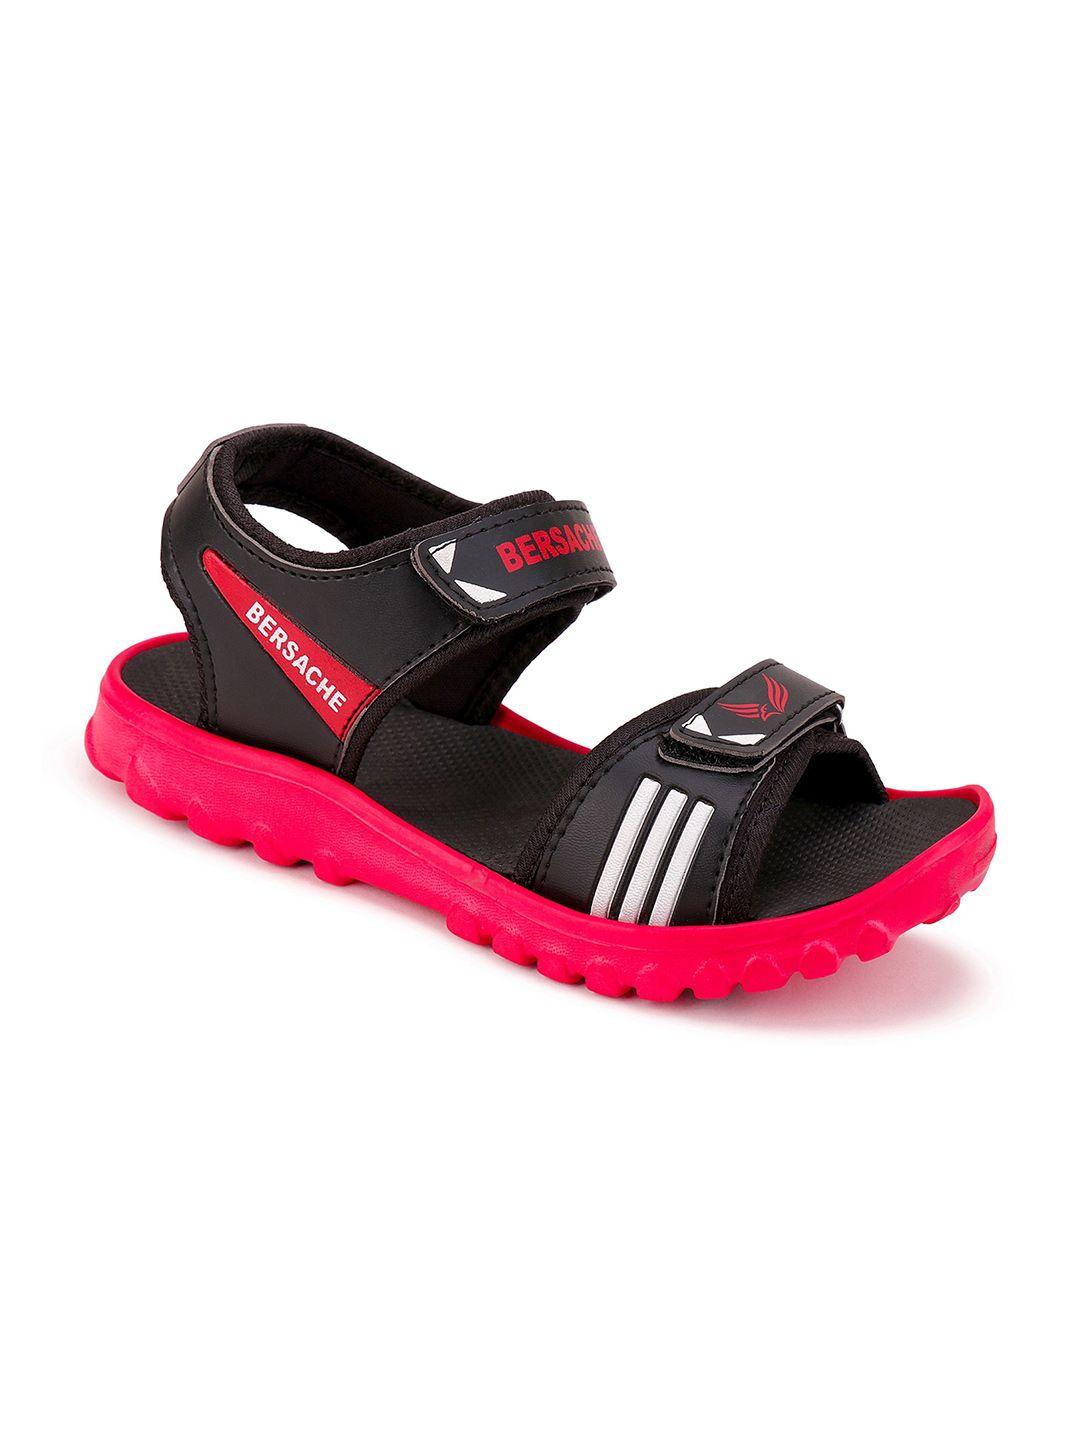 bersache-men-black-&-red-lightweight-sports-sandals